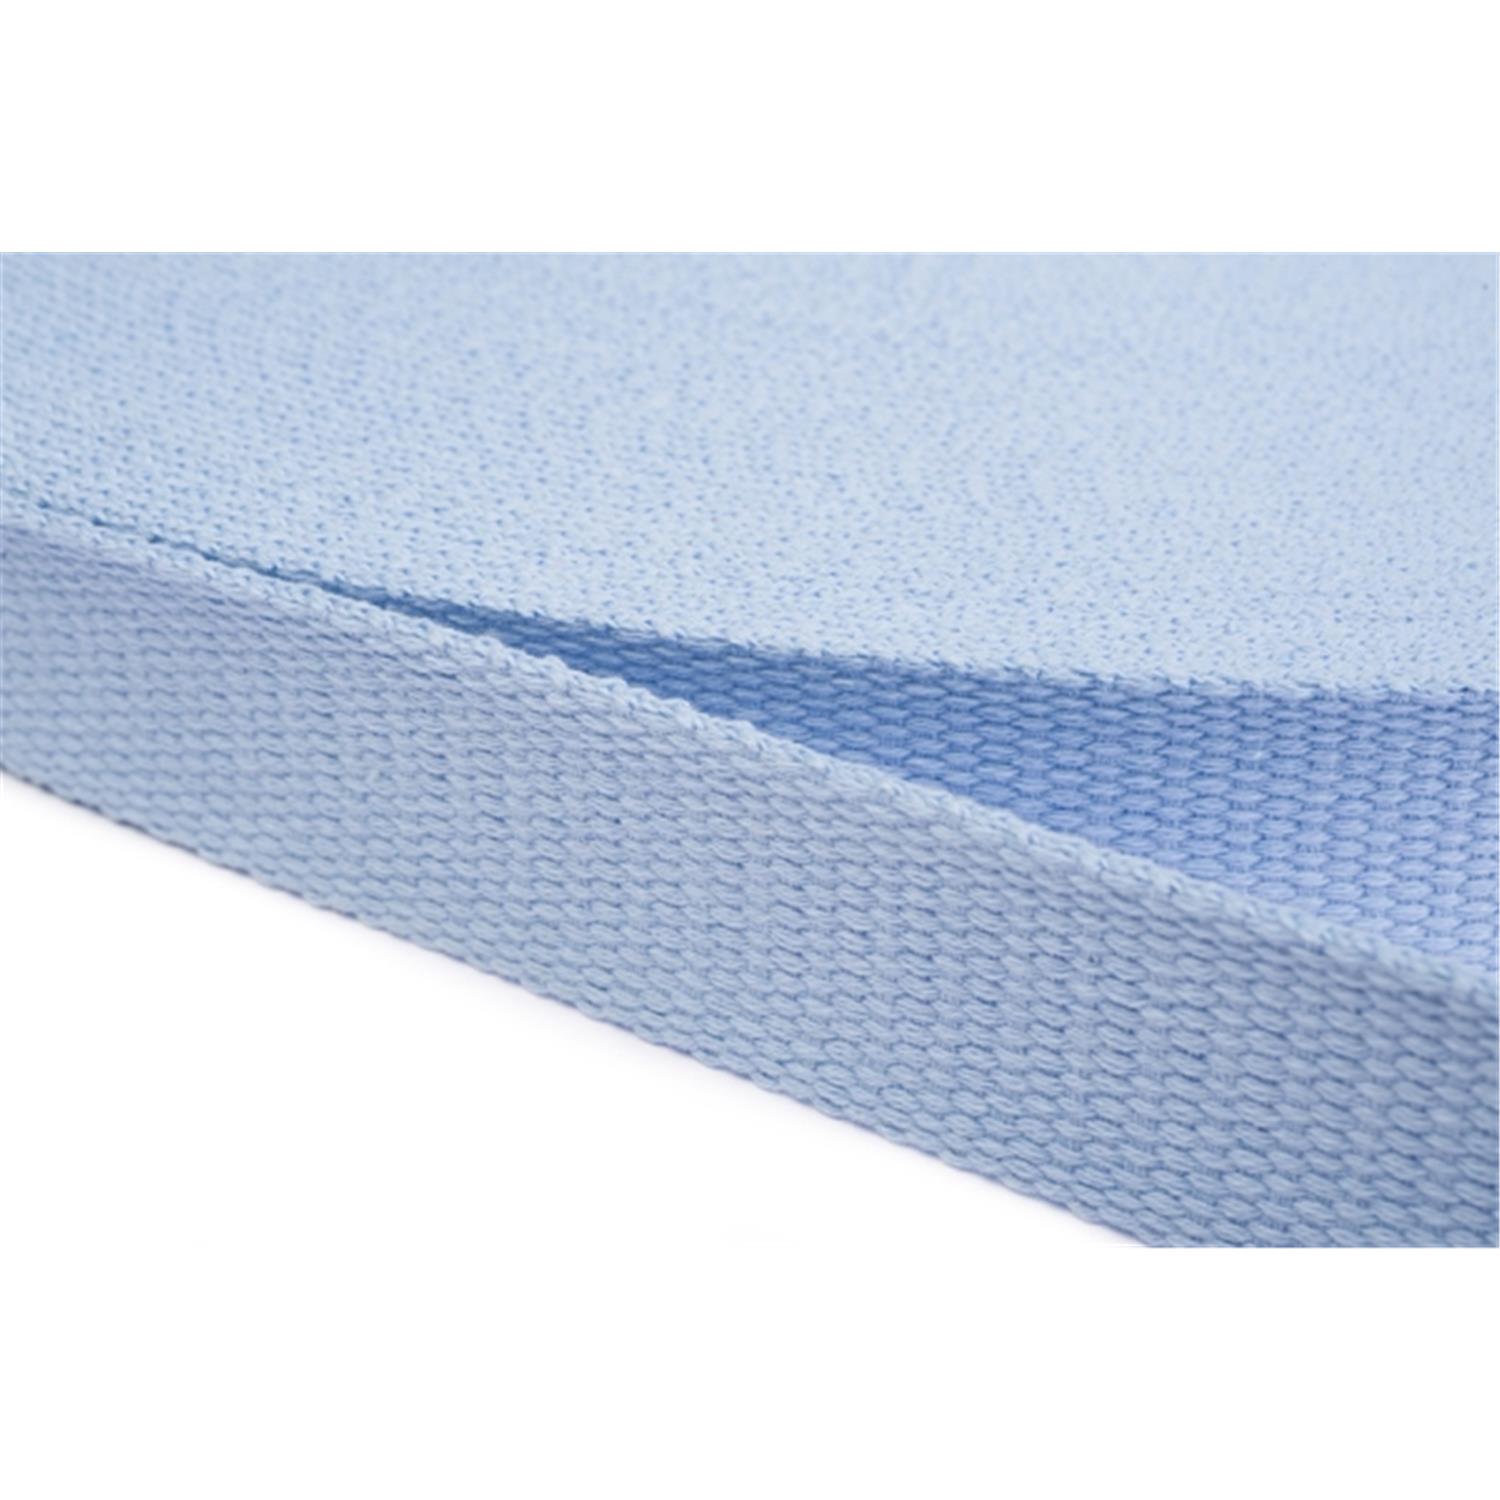 Gurtband aus Baumwolle 30mm in 20 Farben 11 - hellblau 12 Meter